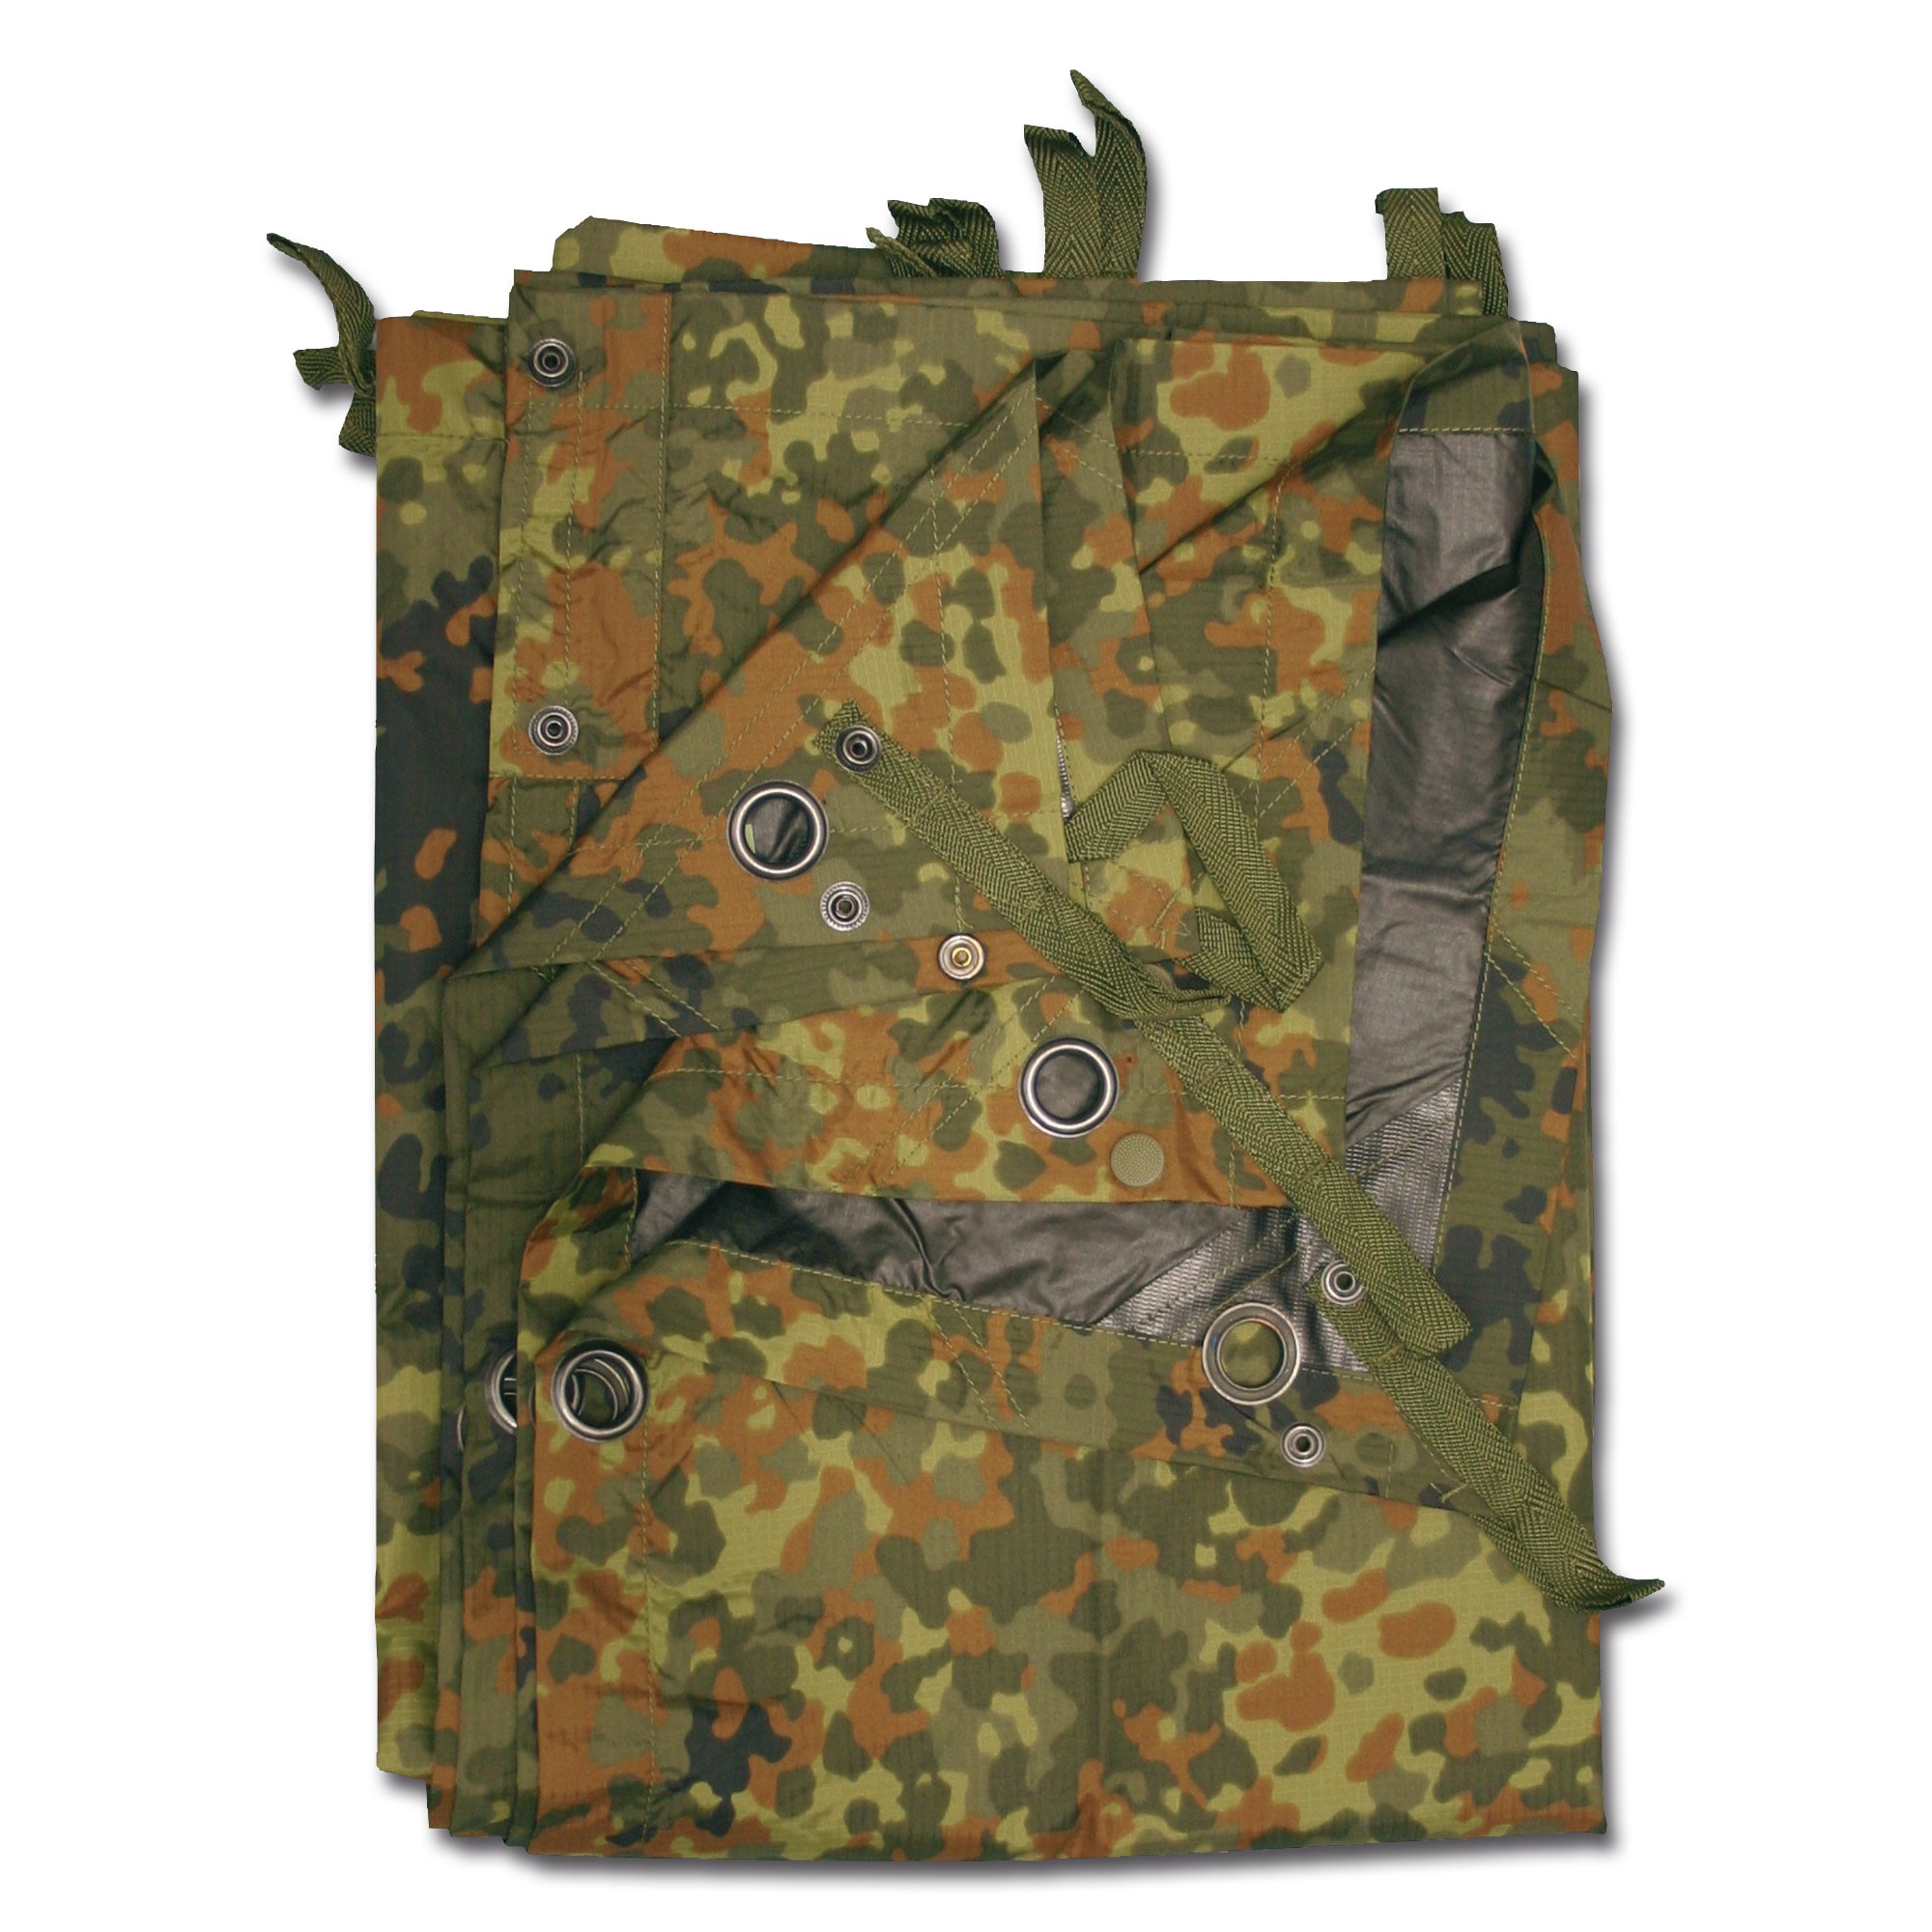 Purchase the Commando Tarp TacGear flecktarn by ASMC